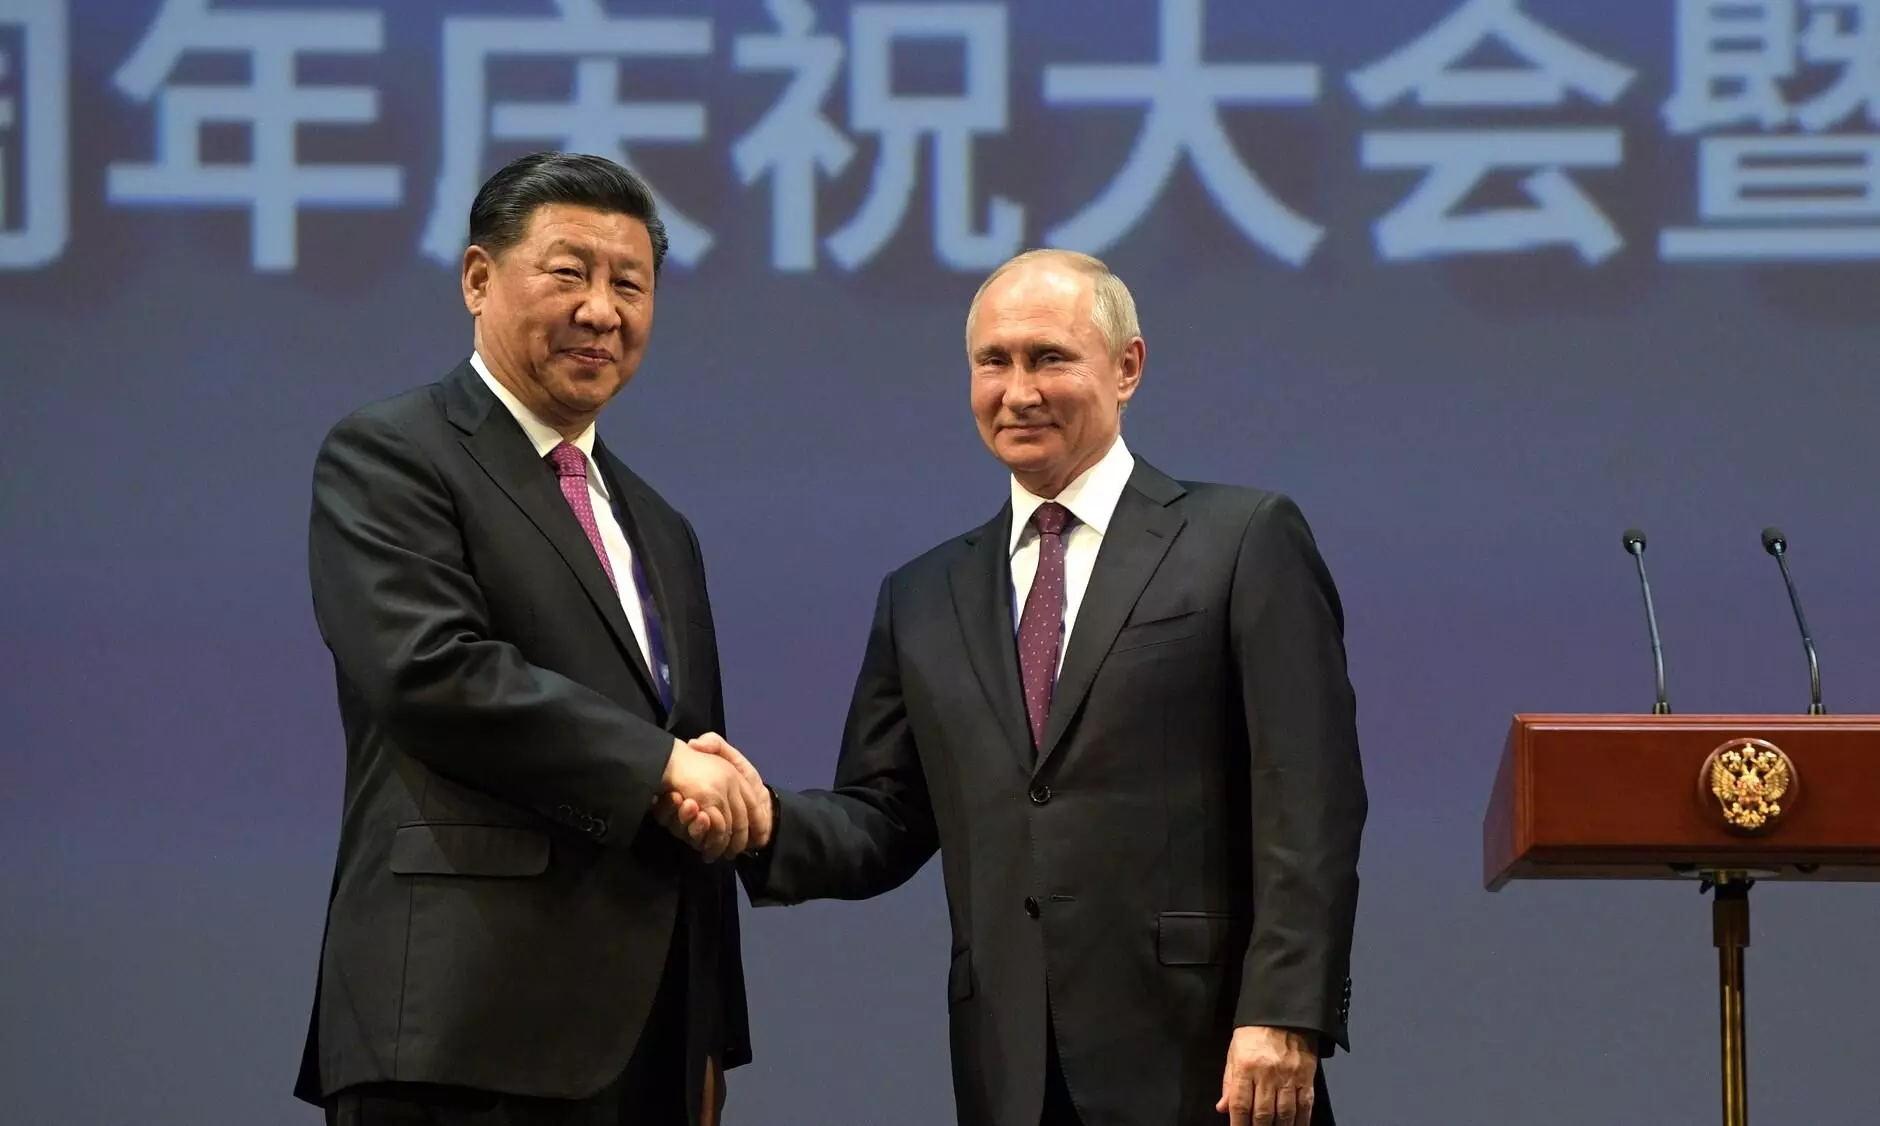 Need to strengthen military cooperation: Putin tells Xi Jinping